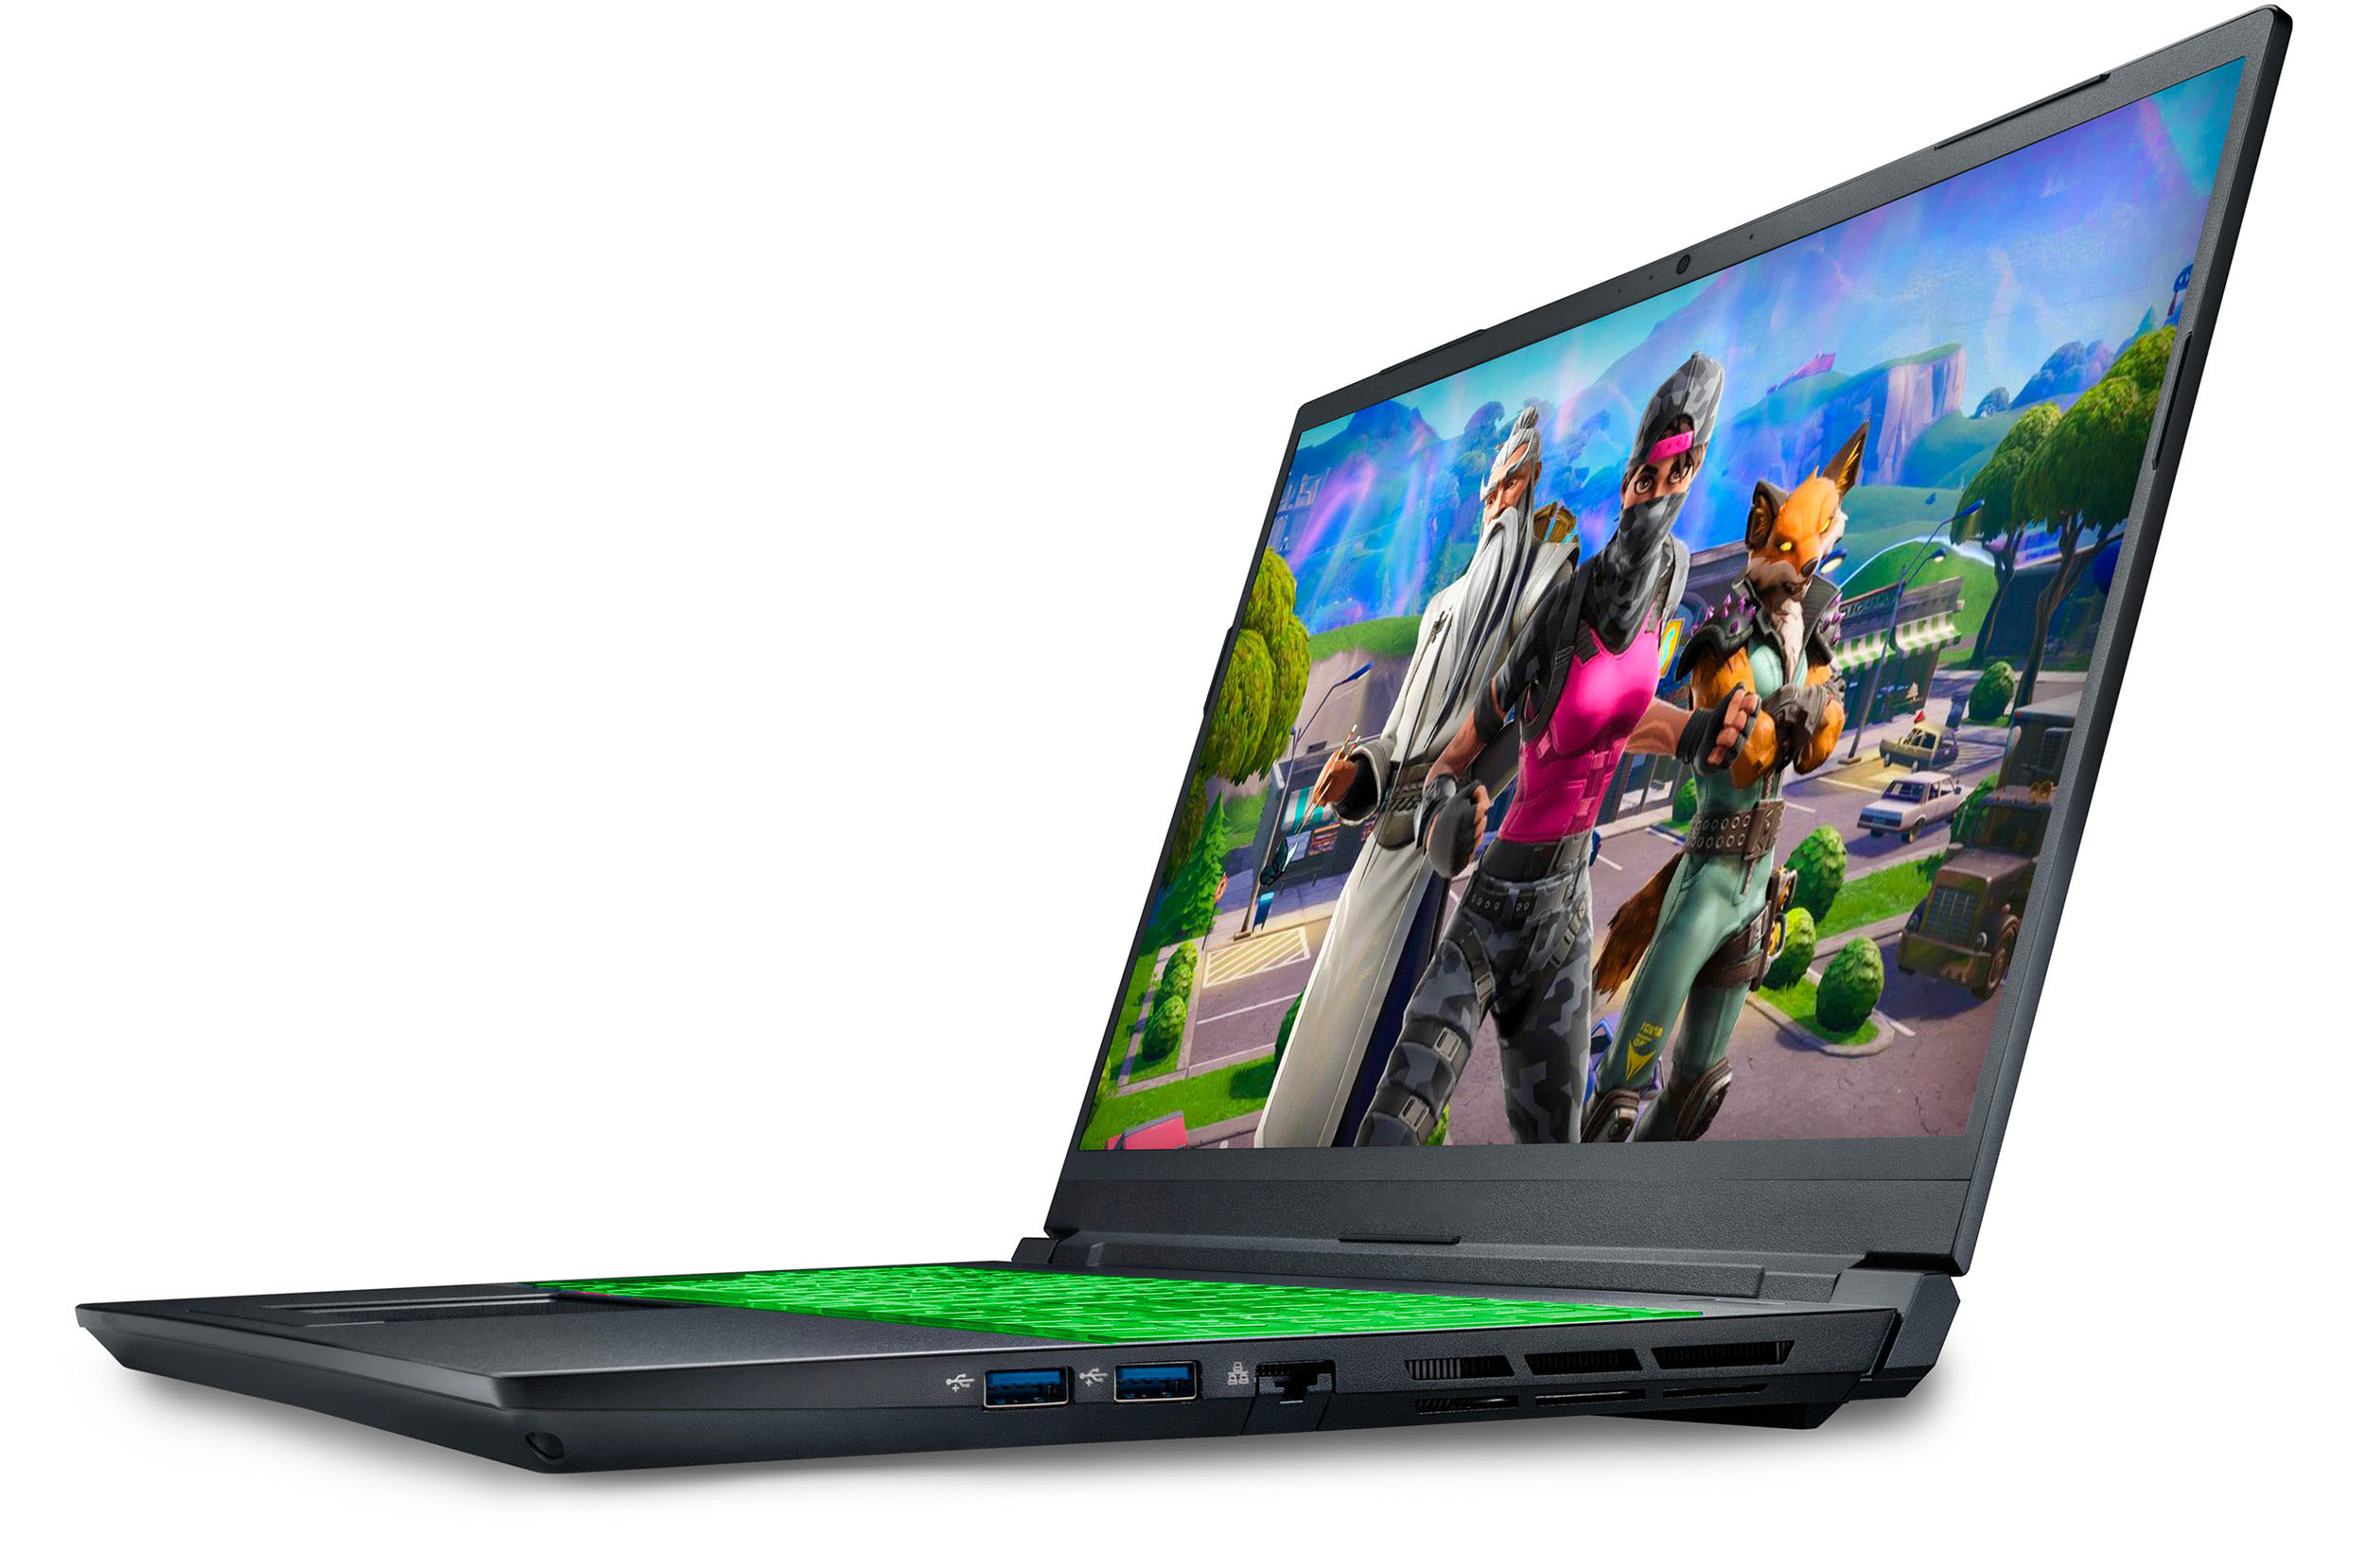 Avon 15 Gaming Laptop By Digital Storm